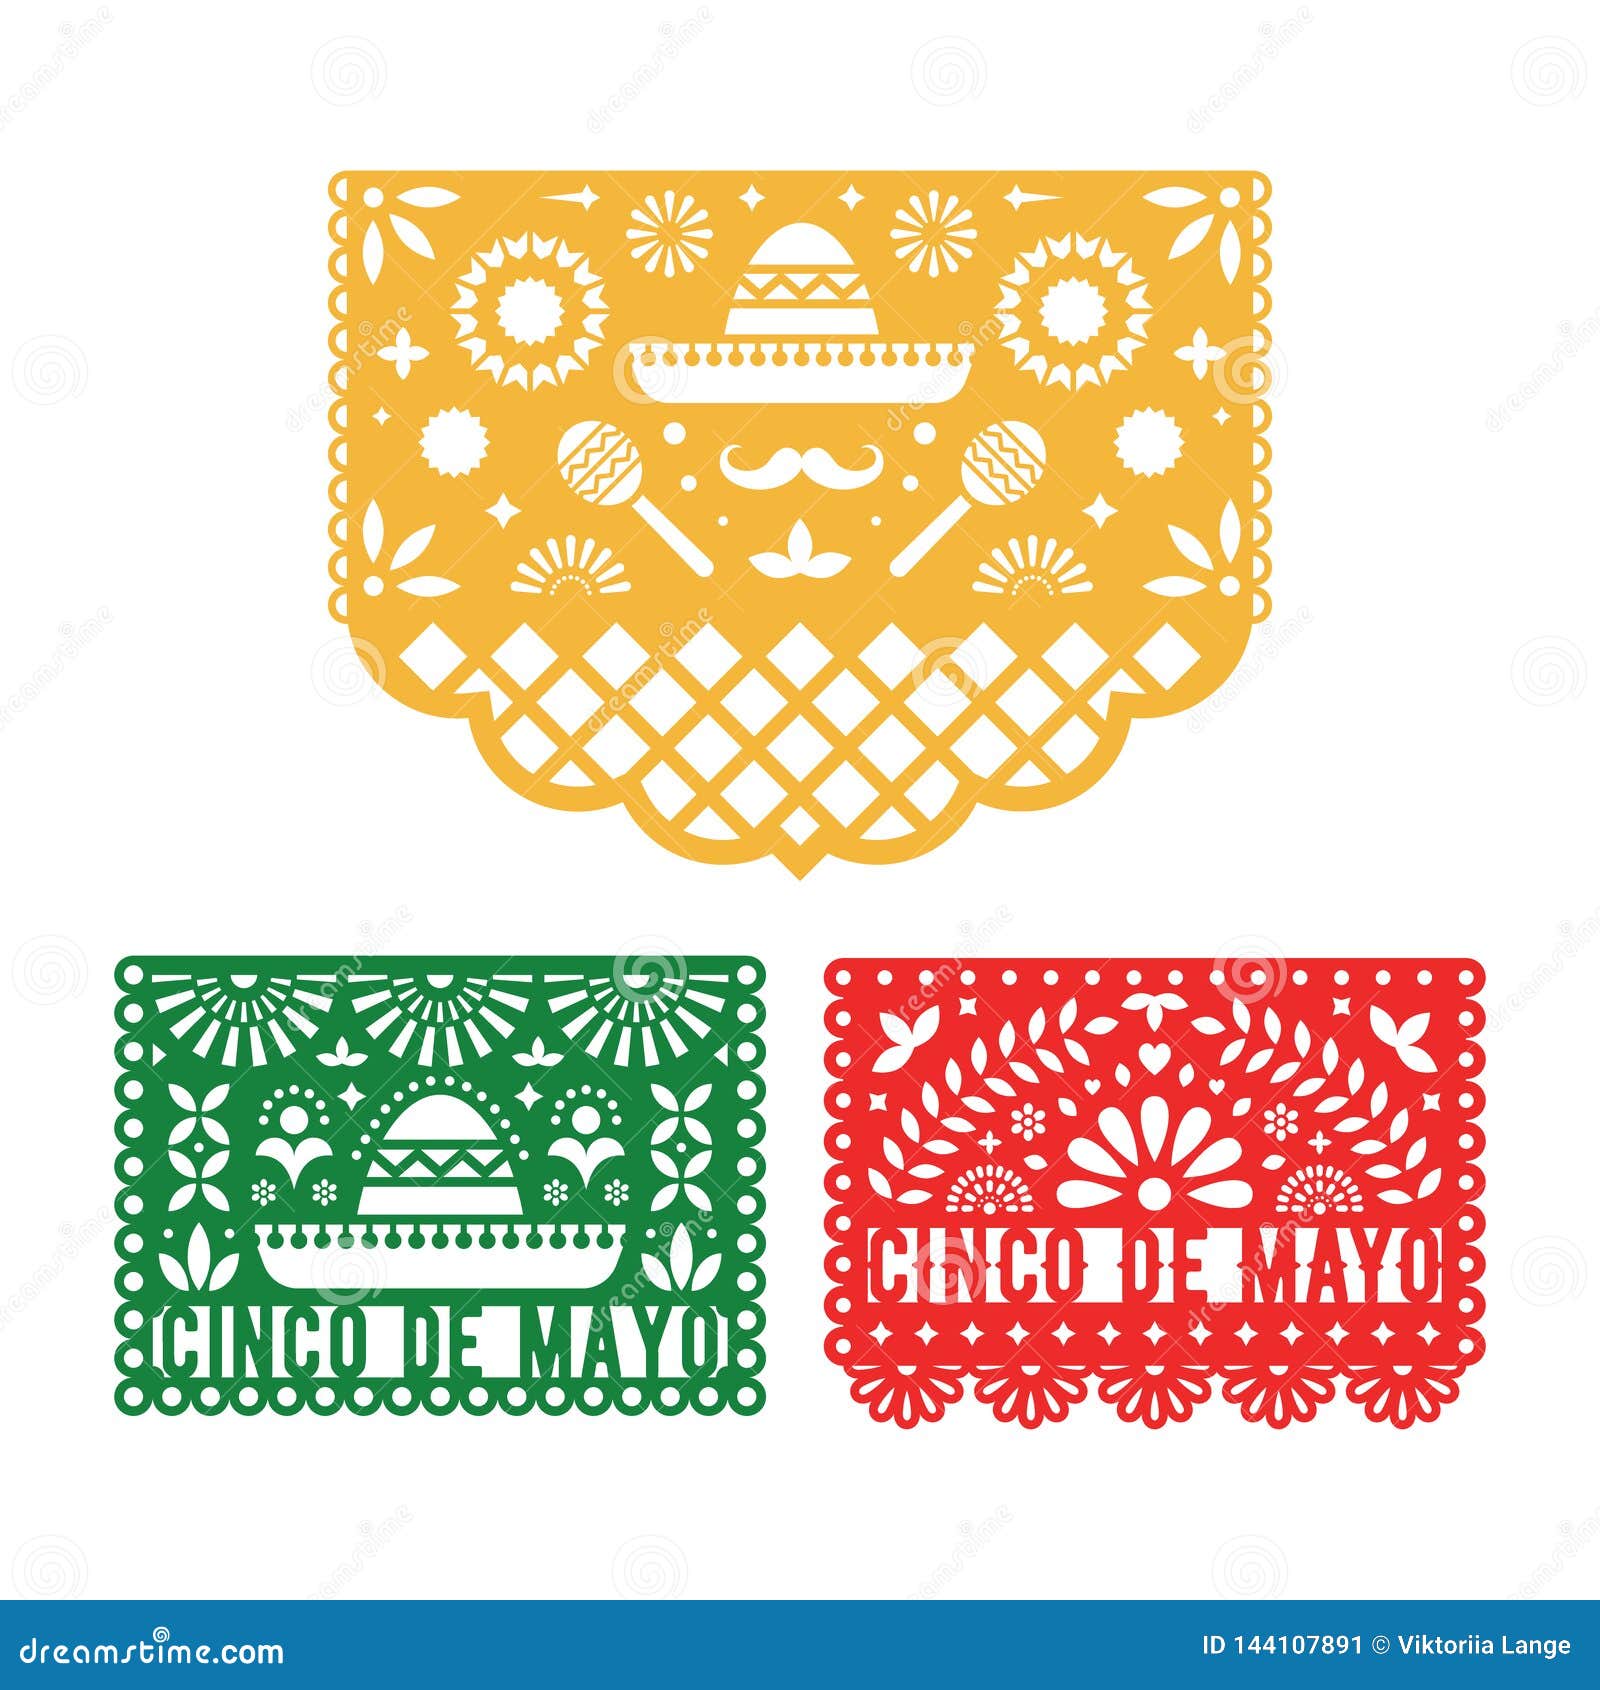 papel picado set, mexican paper decorations for cinco de mayo.